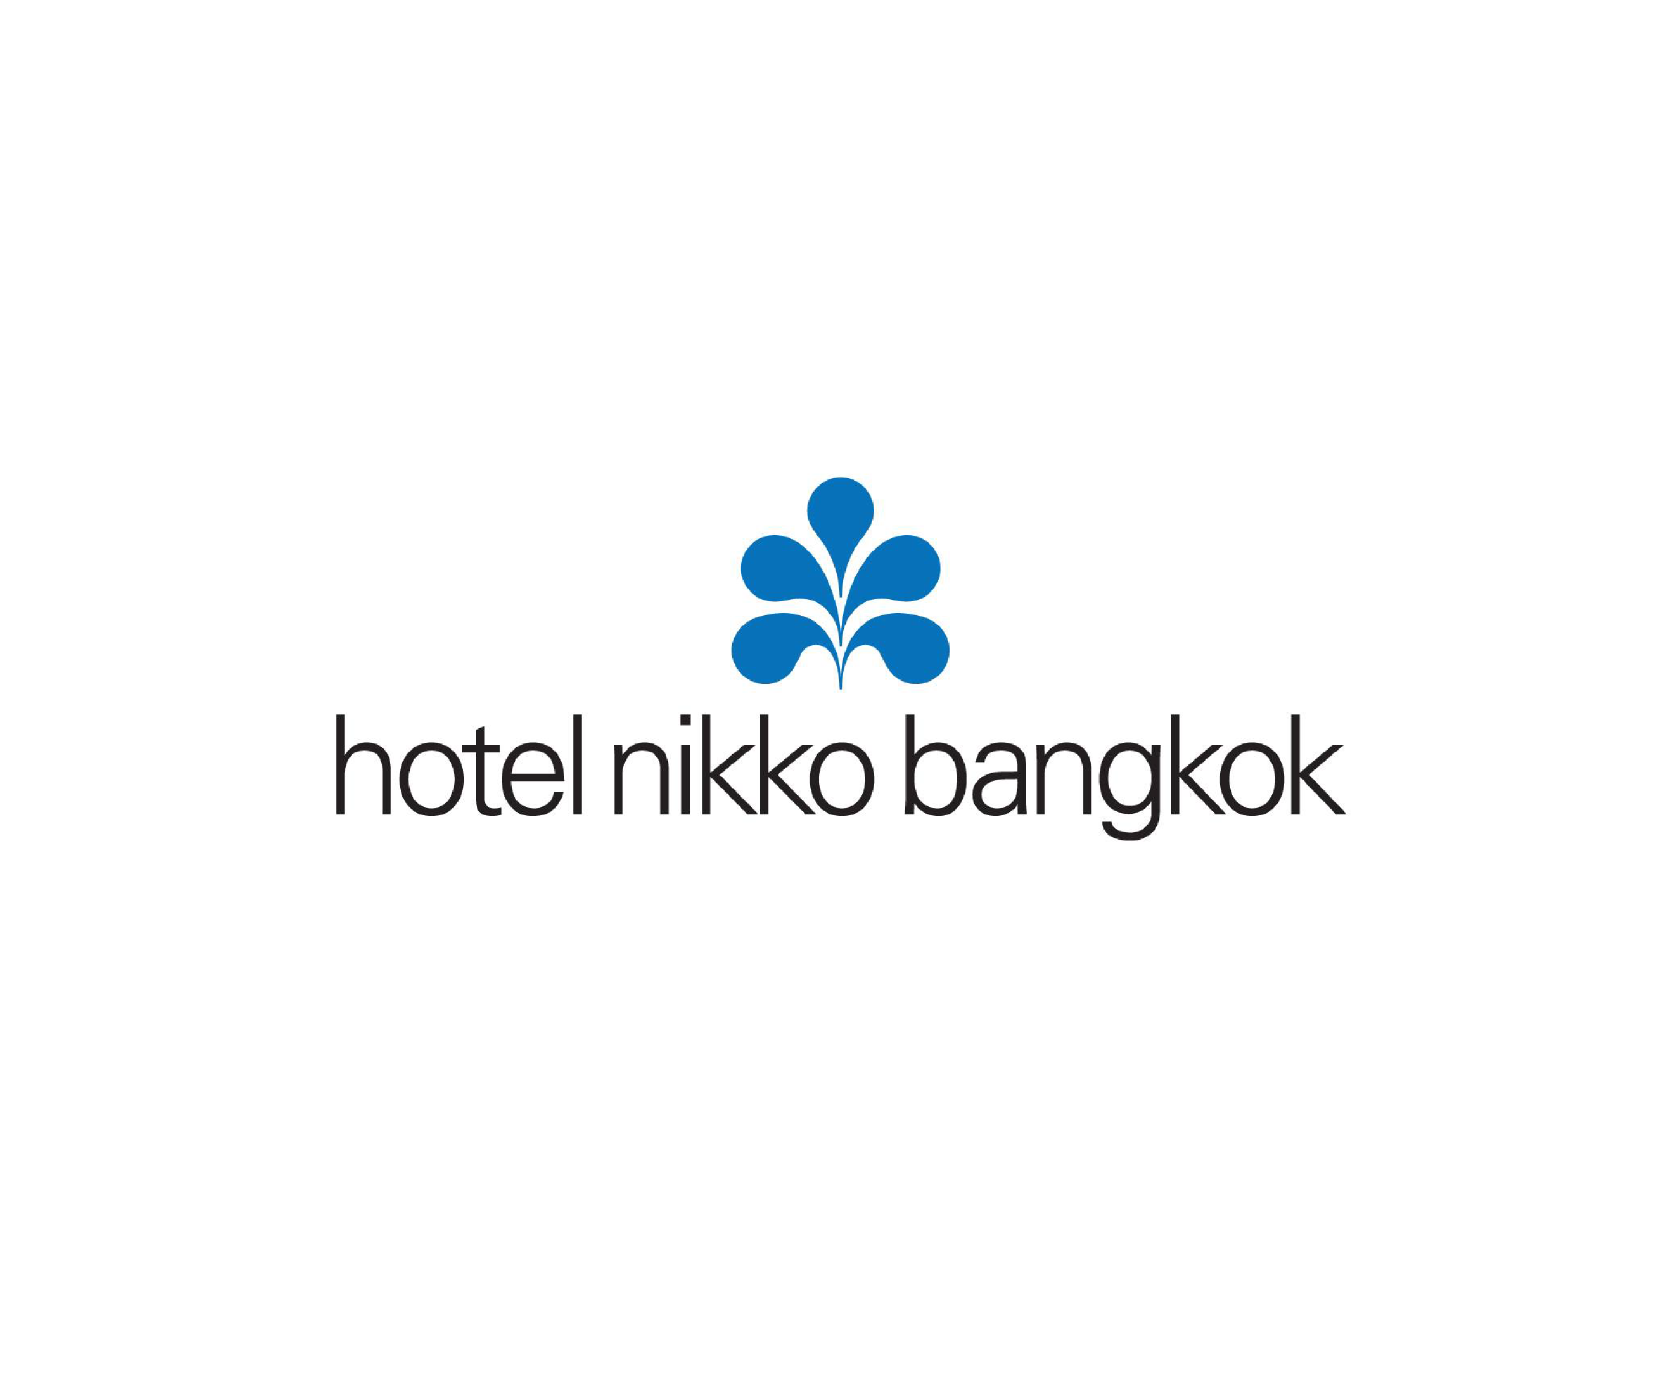 Digital Signage - Hotel Nikko Bangkok